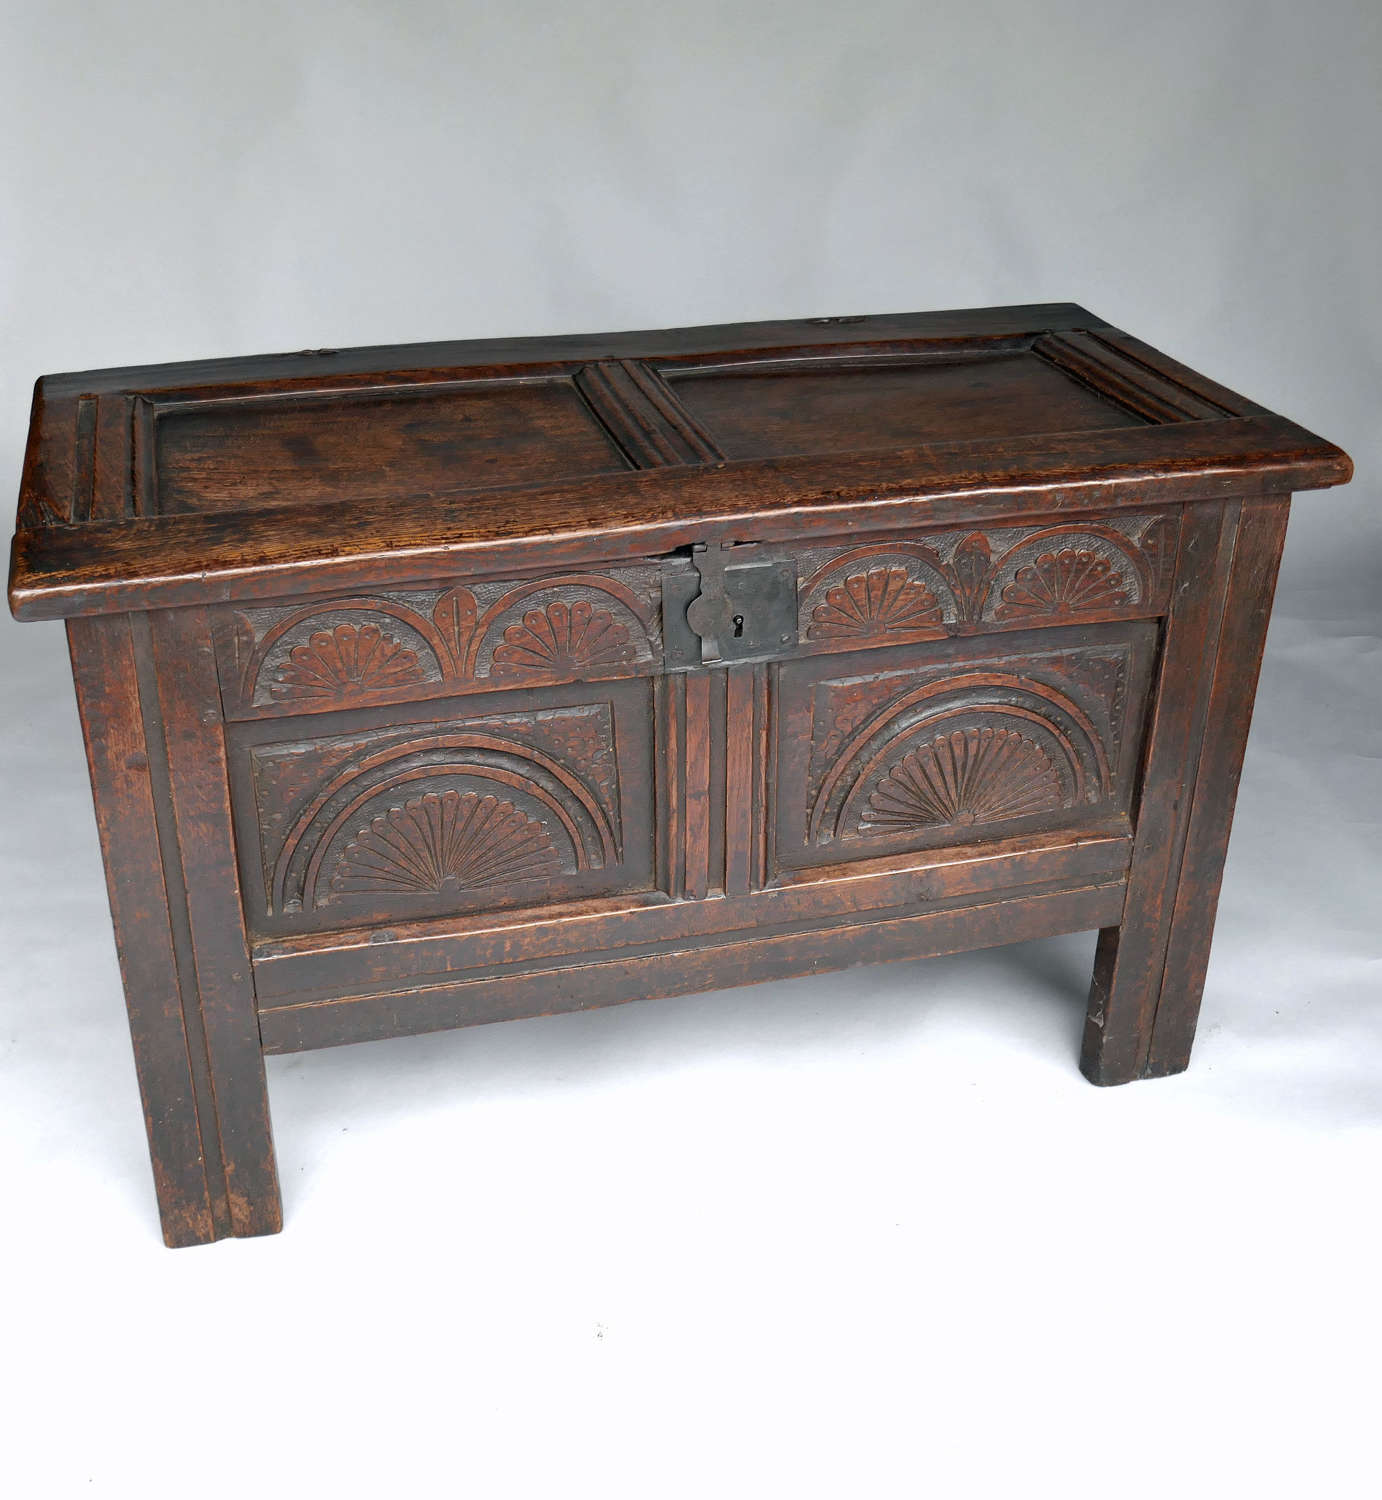 Antique 17thc Oak Furniture Joyned Panelled Coffer.  English C1640-60.